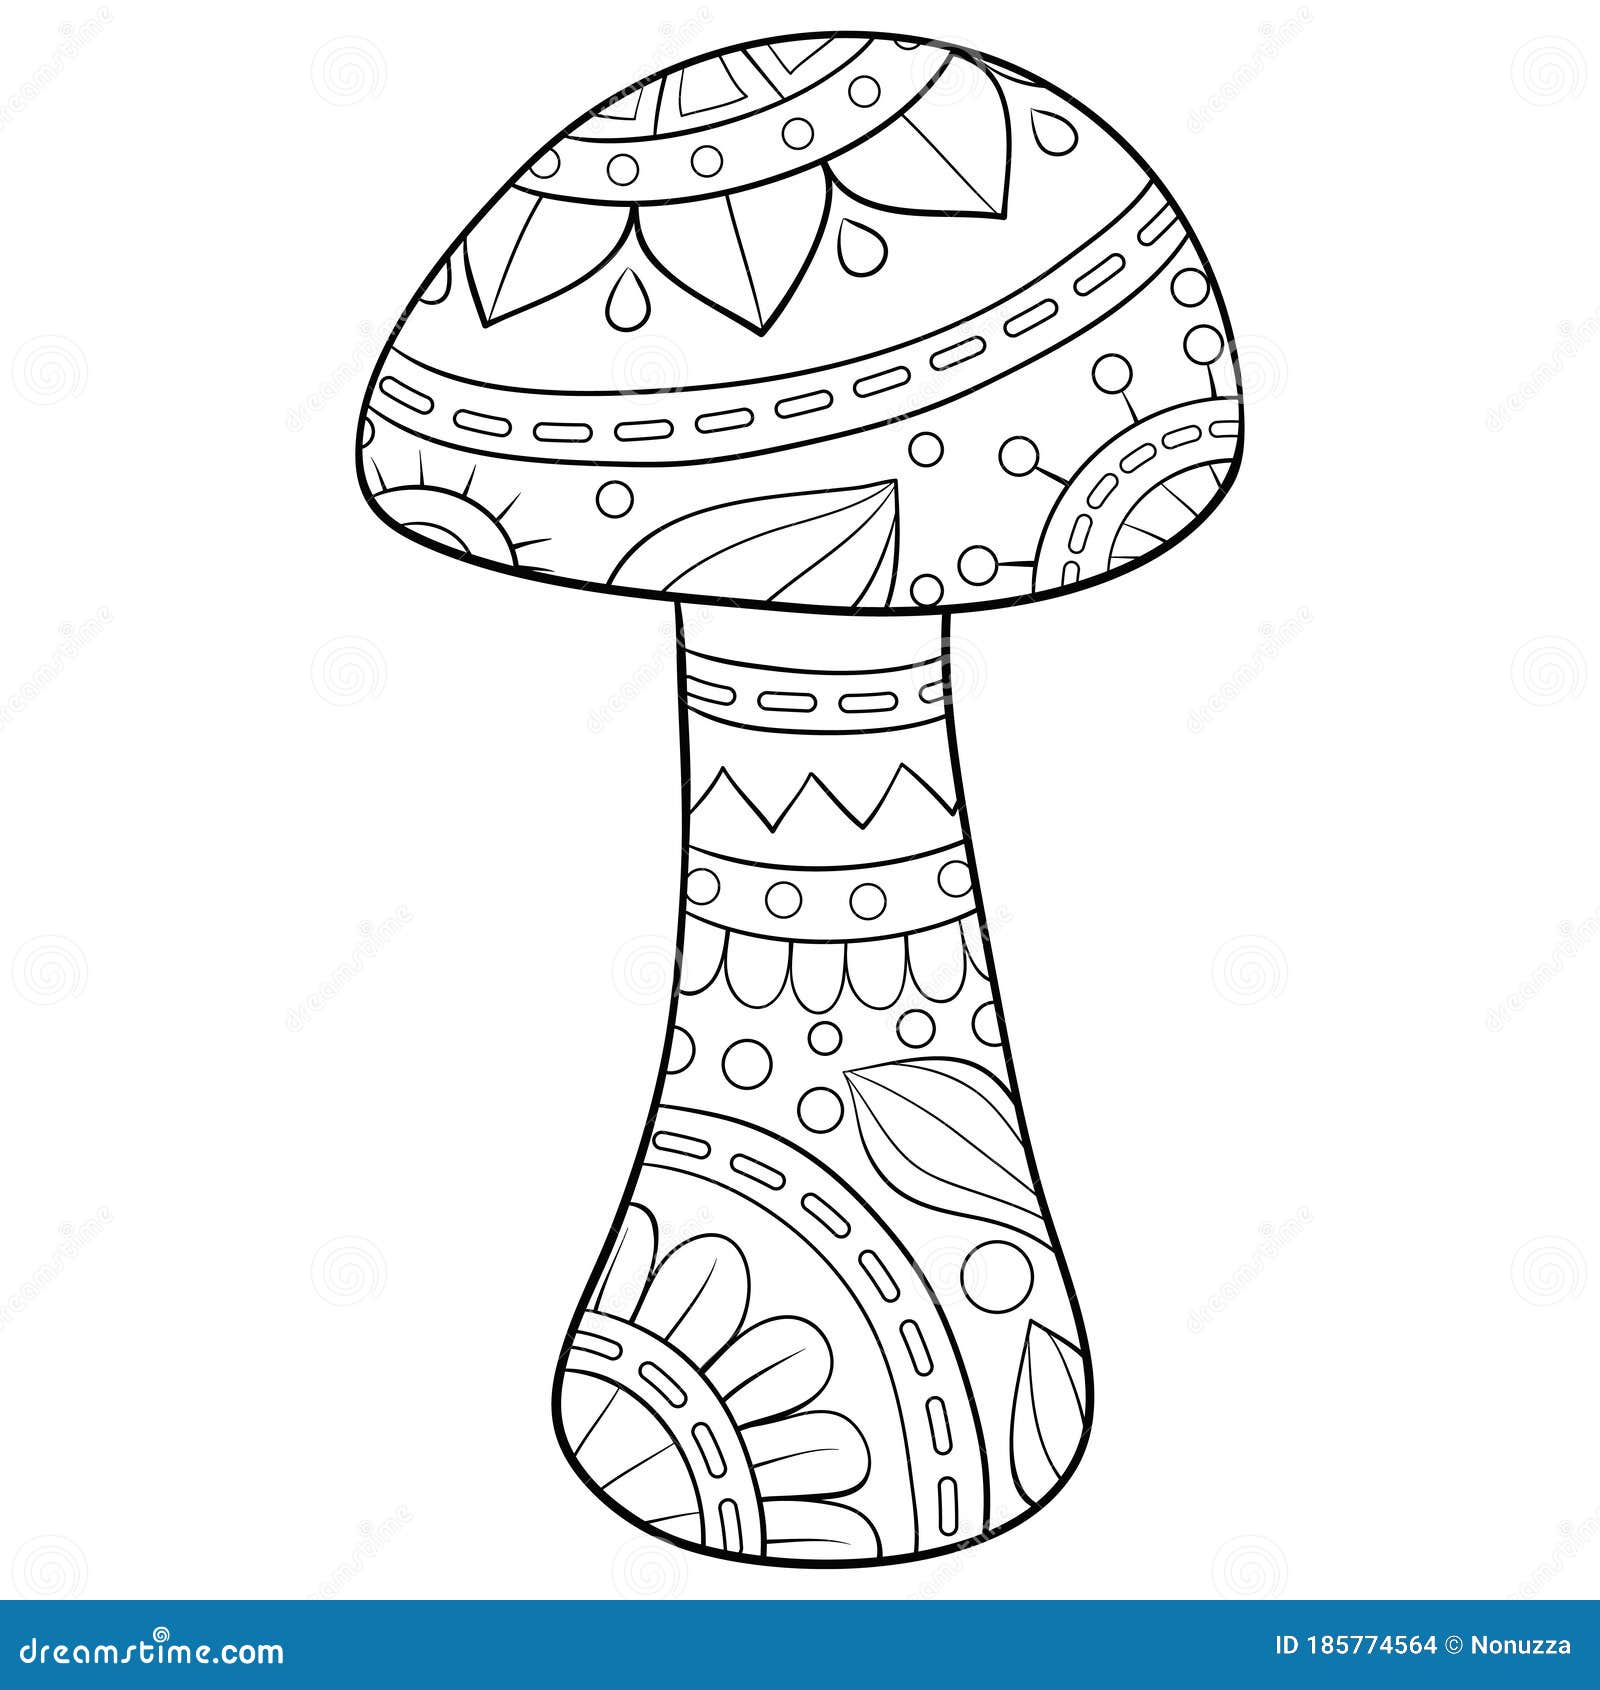 Adult Coloring Mushroom Stock Illustrations – 20 Adult Coloring ...